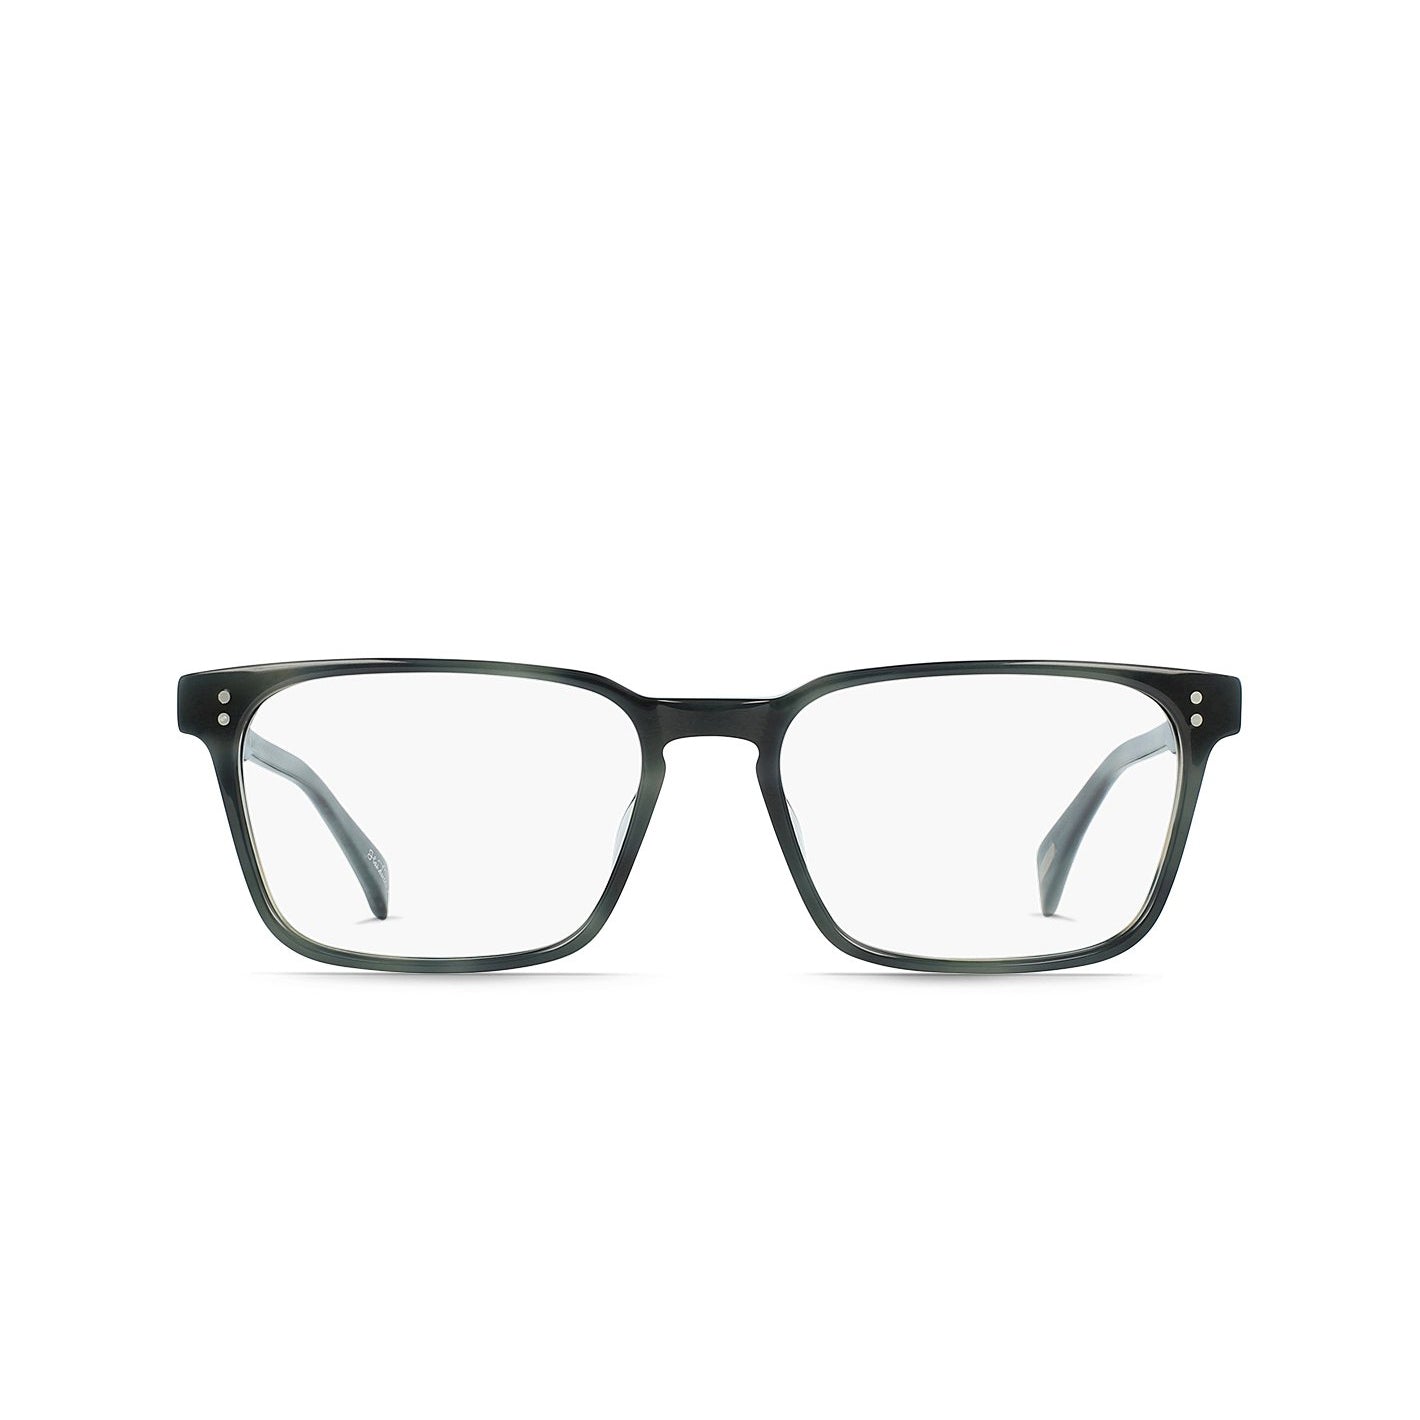 RAEN Nolan | Progressive Prescription Eyeglasses | Charcoal Tortoise